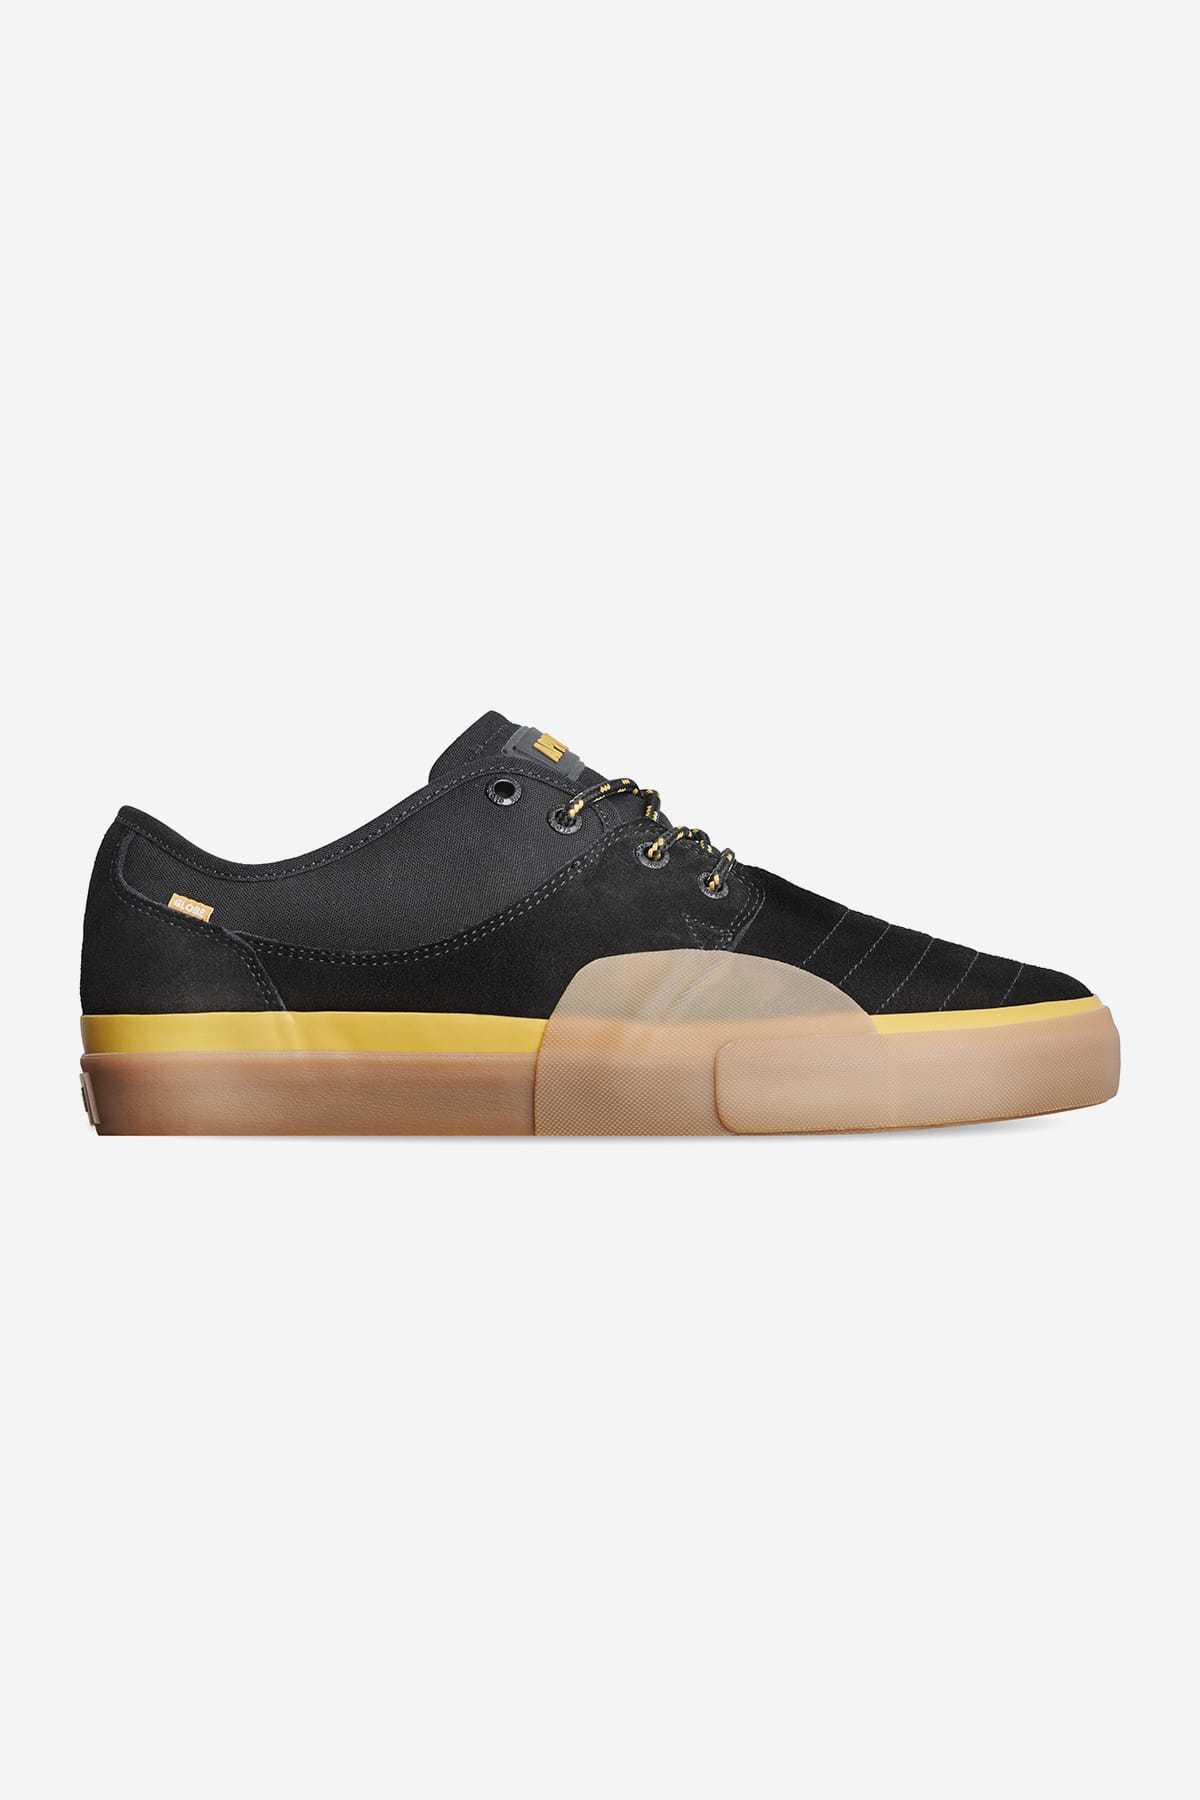 Globe - Mahalo Plus - Preto/Mustard - skateboard Sapatos